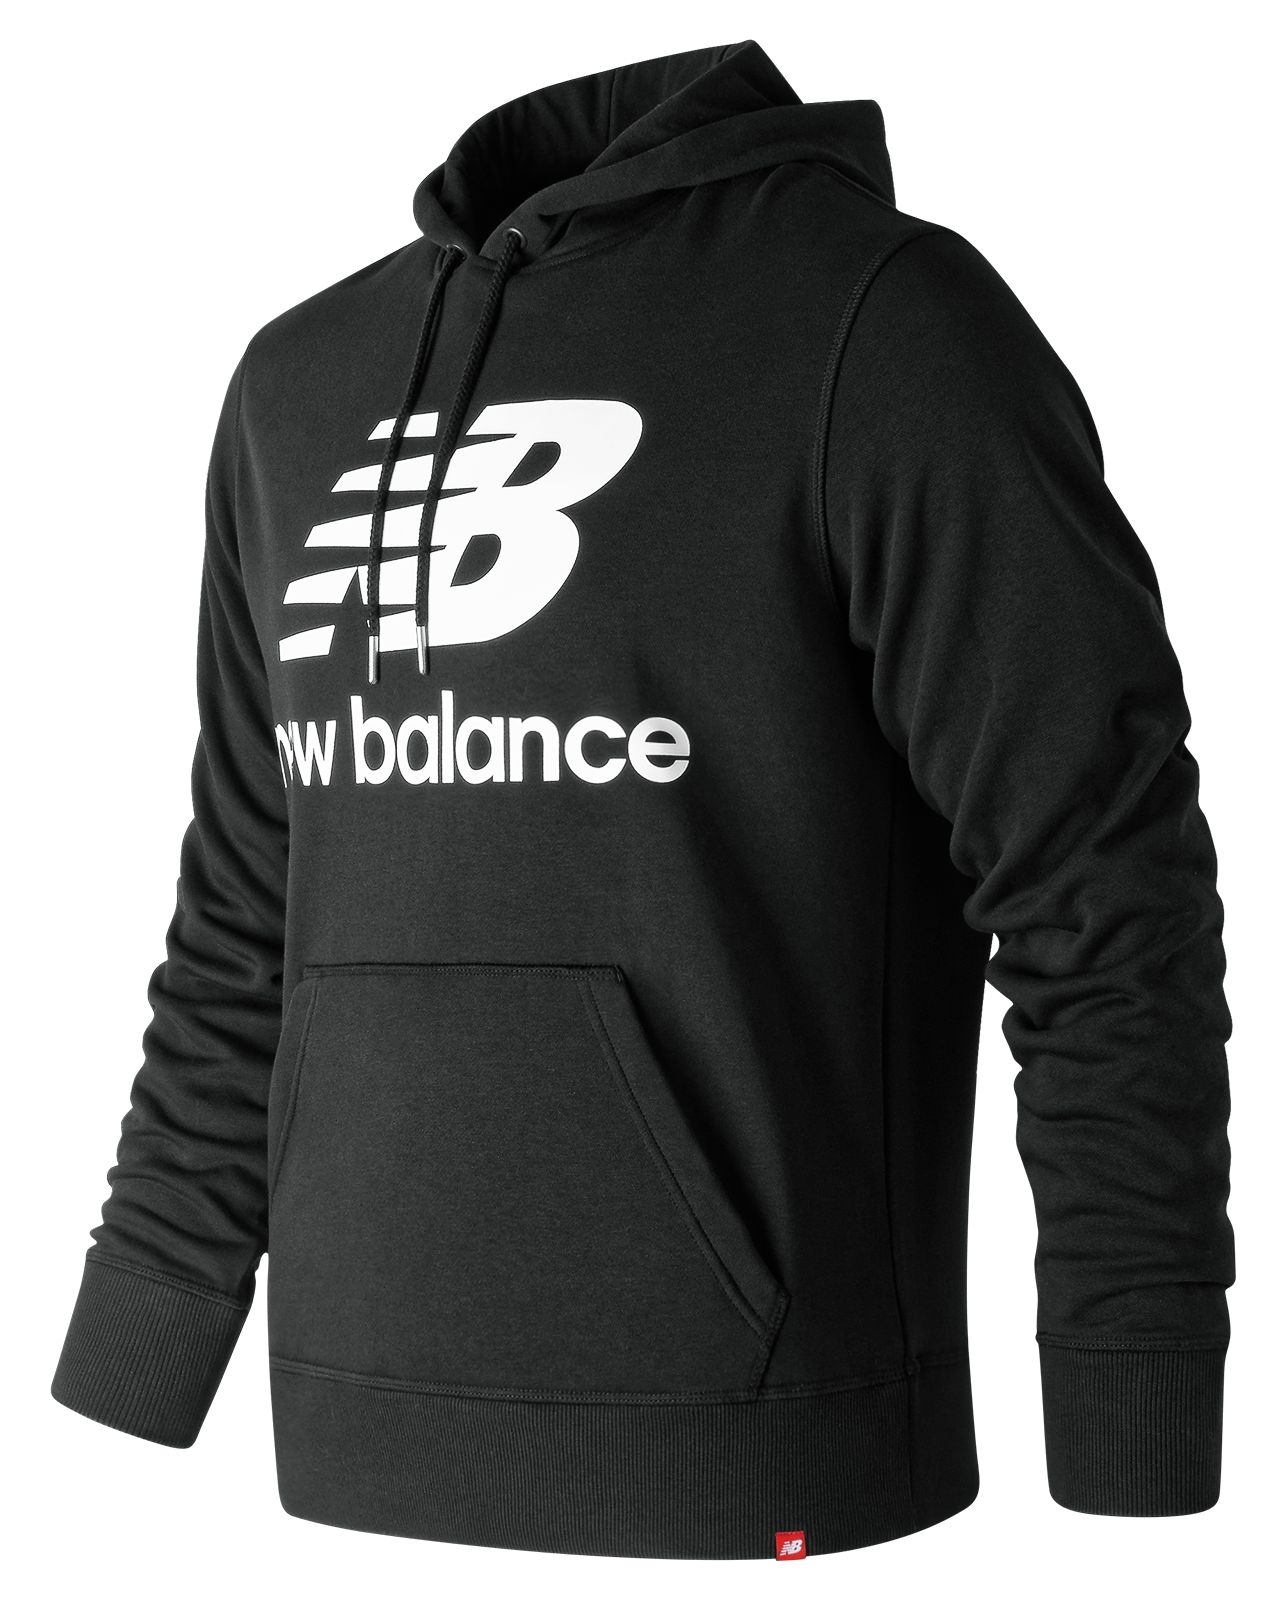 new balance sleeveless hoodie